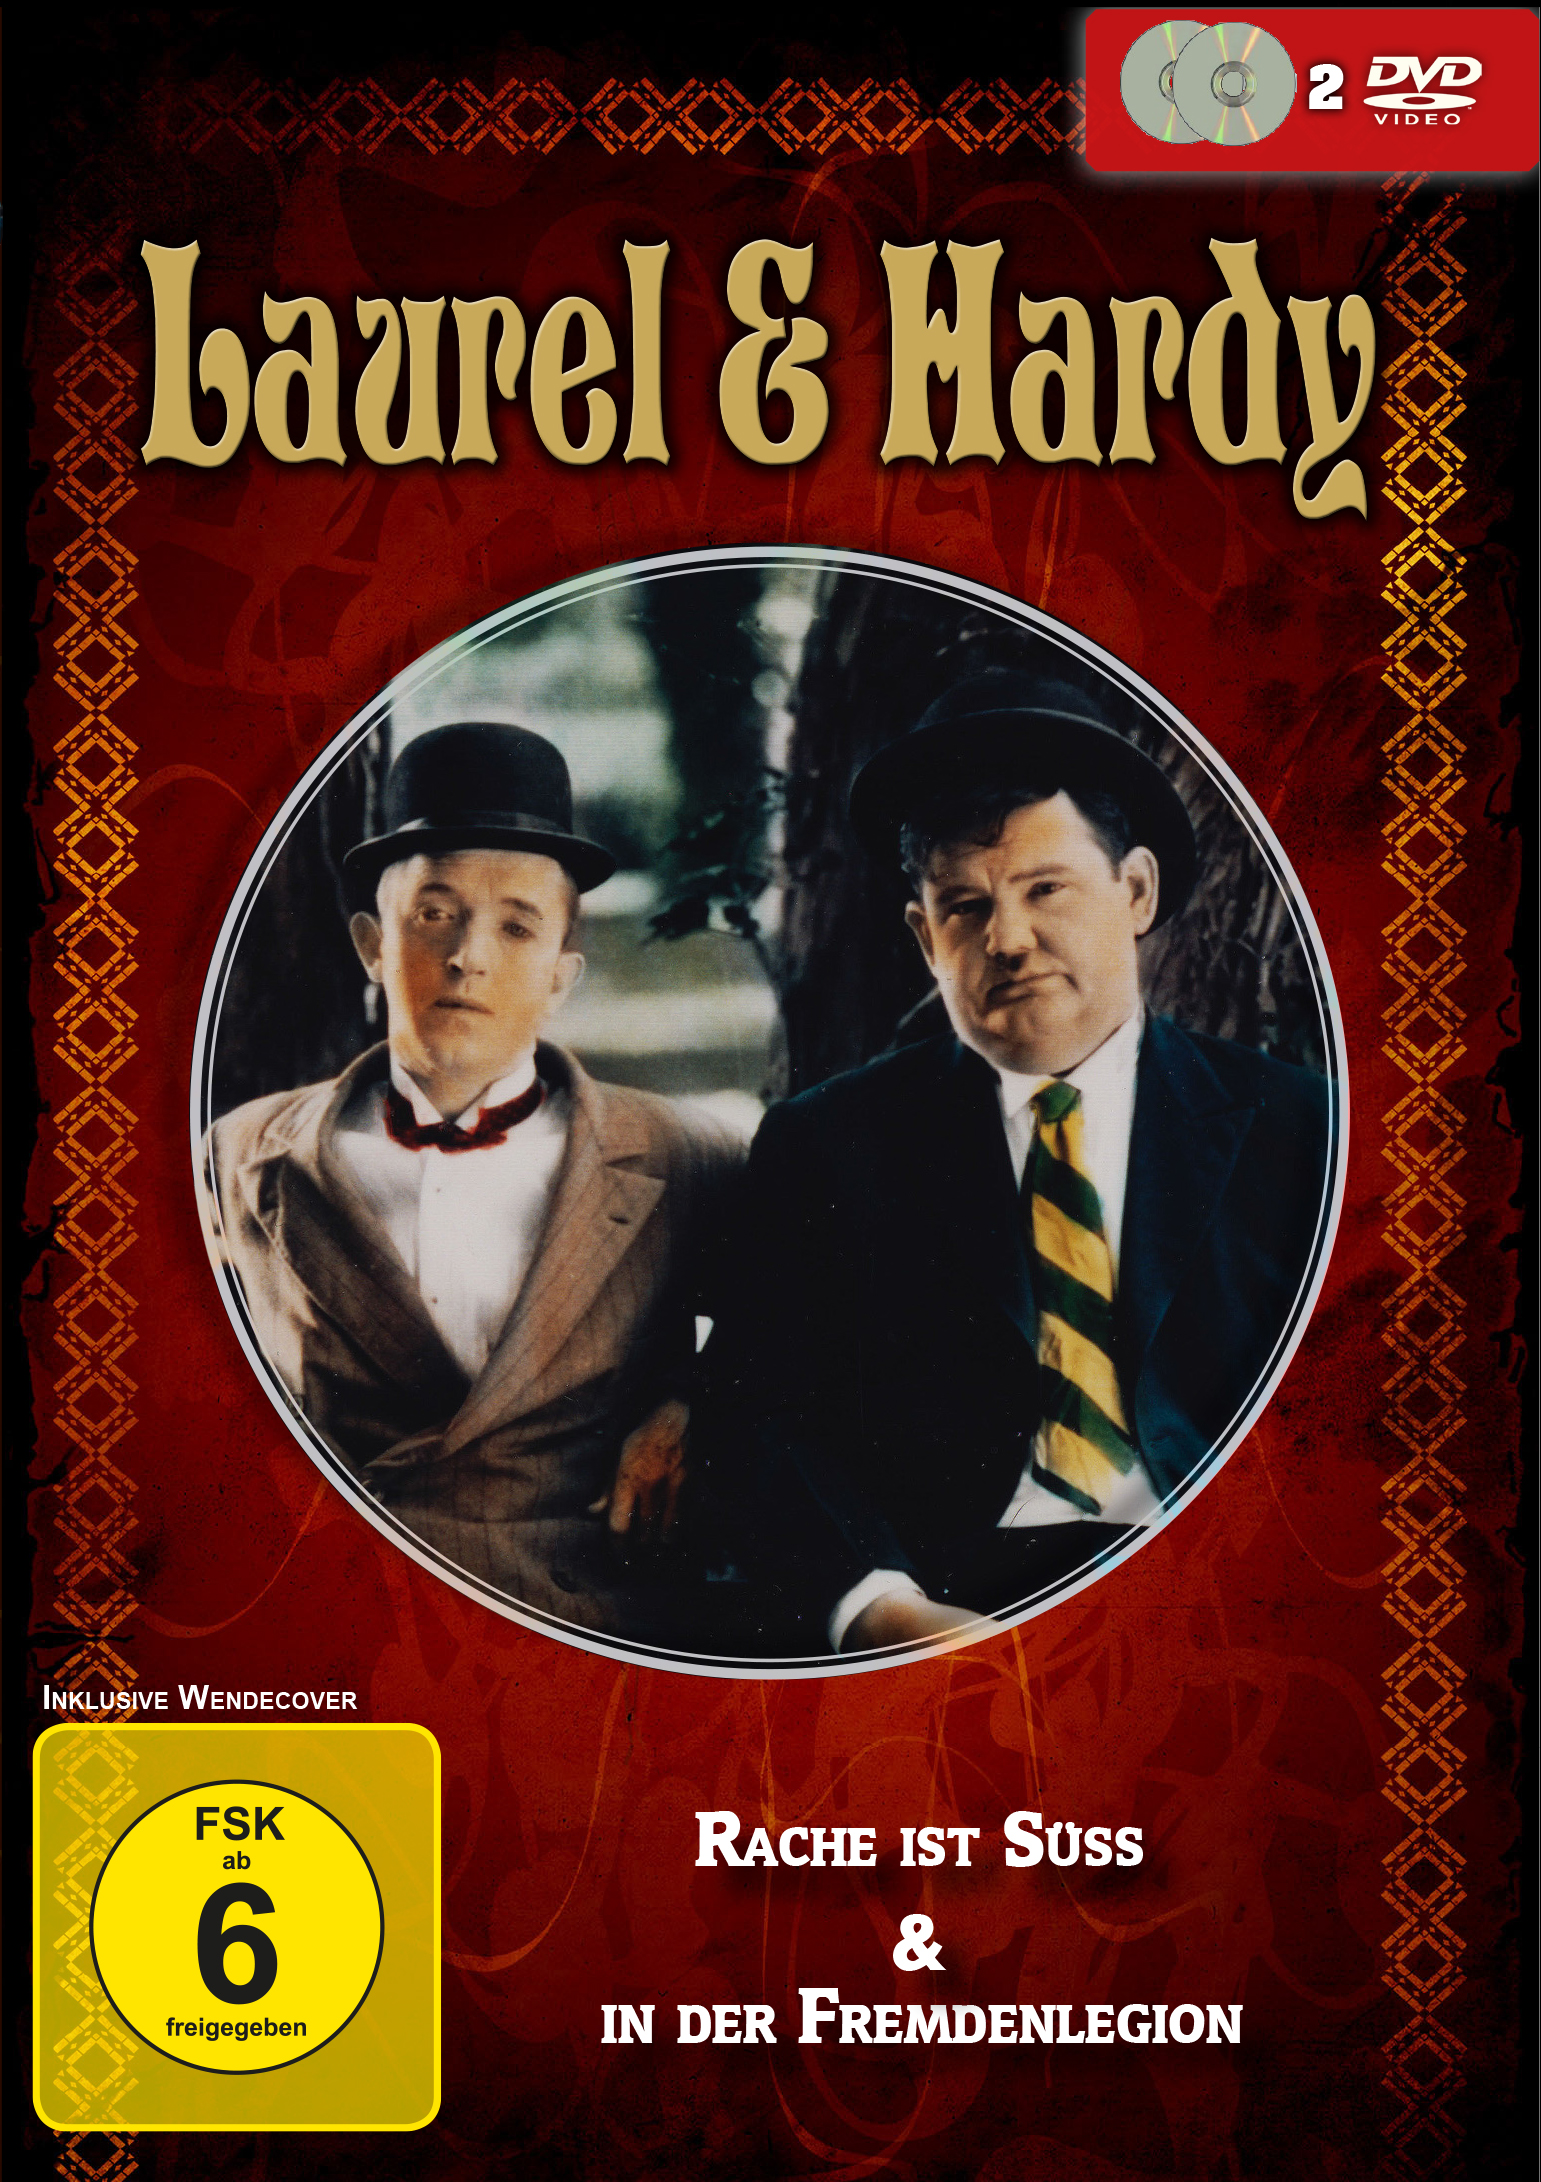 DVD & Hardy Laurel